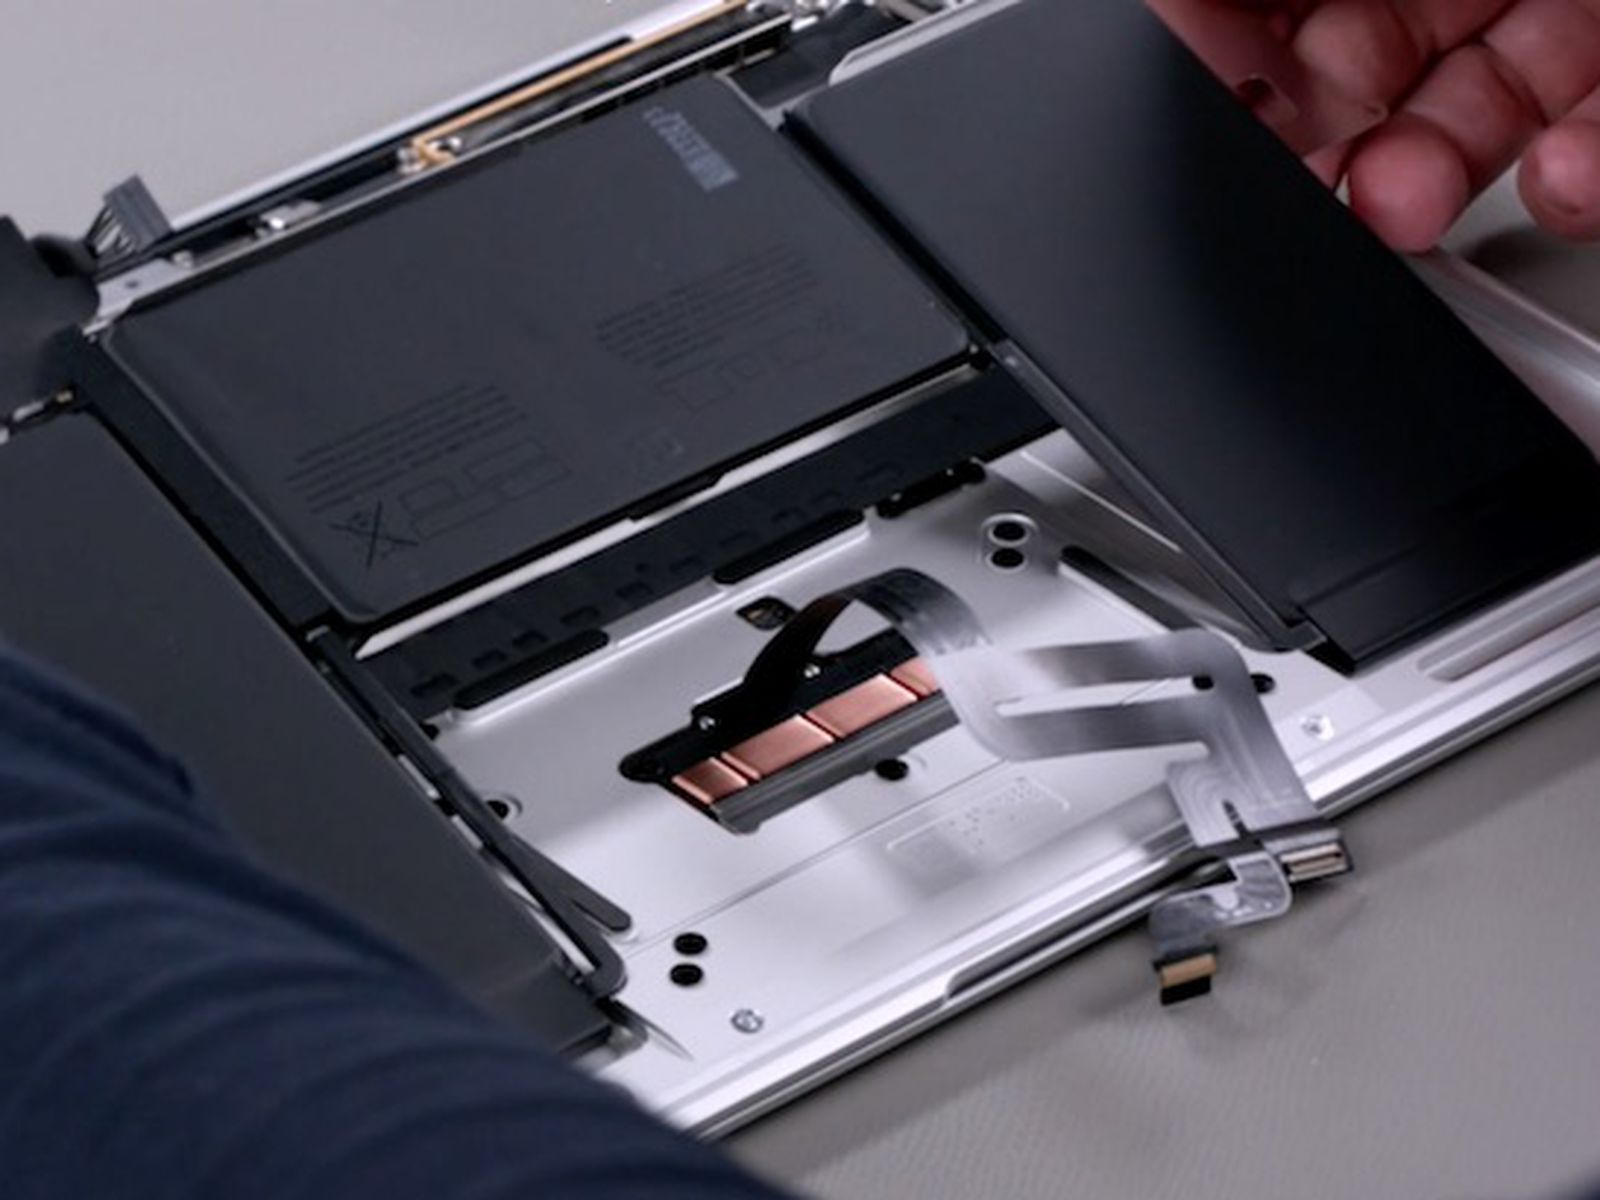 oem macbook air 13 inch battery replacement